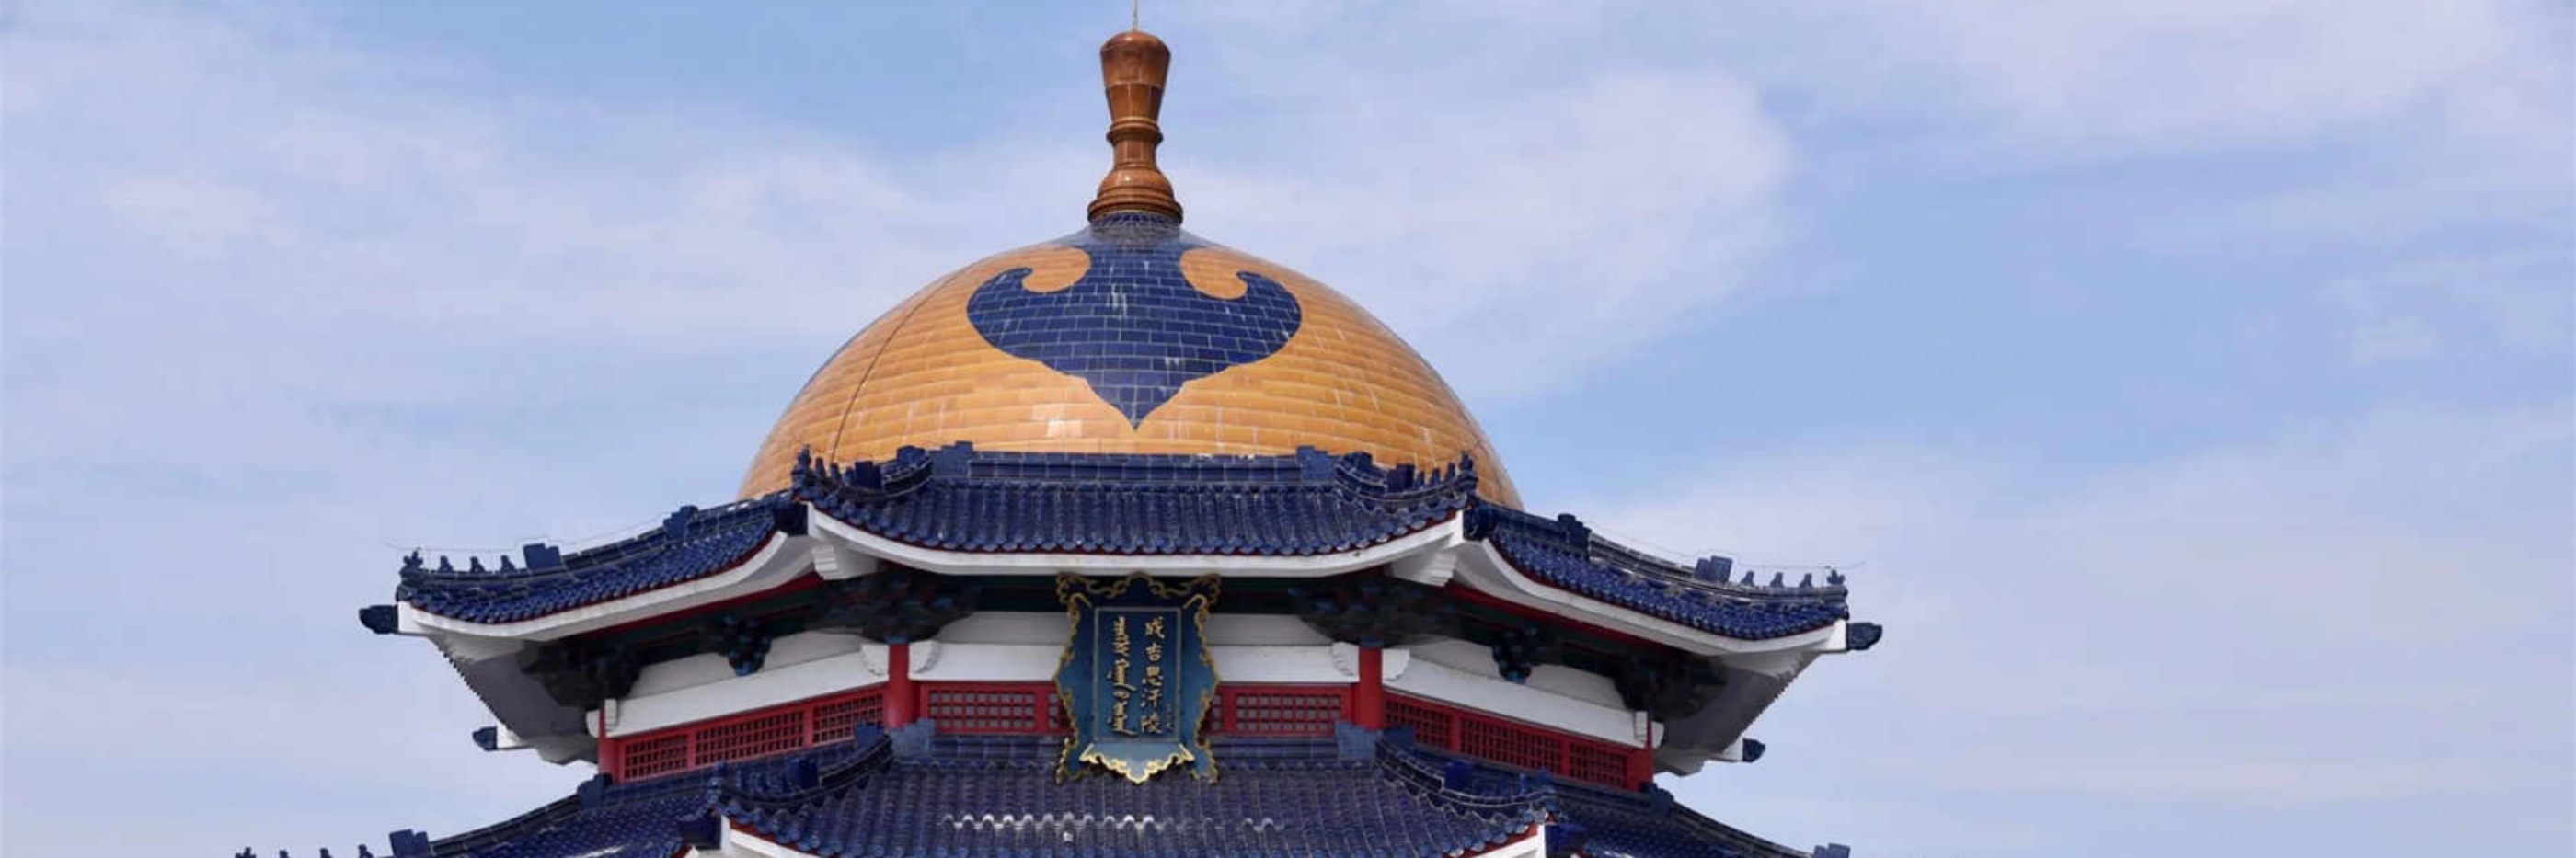 Mausoleum of Genghis Khan Tour